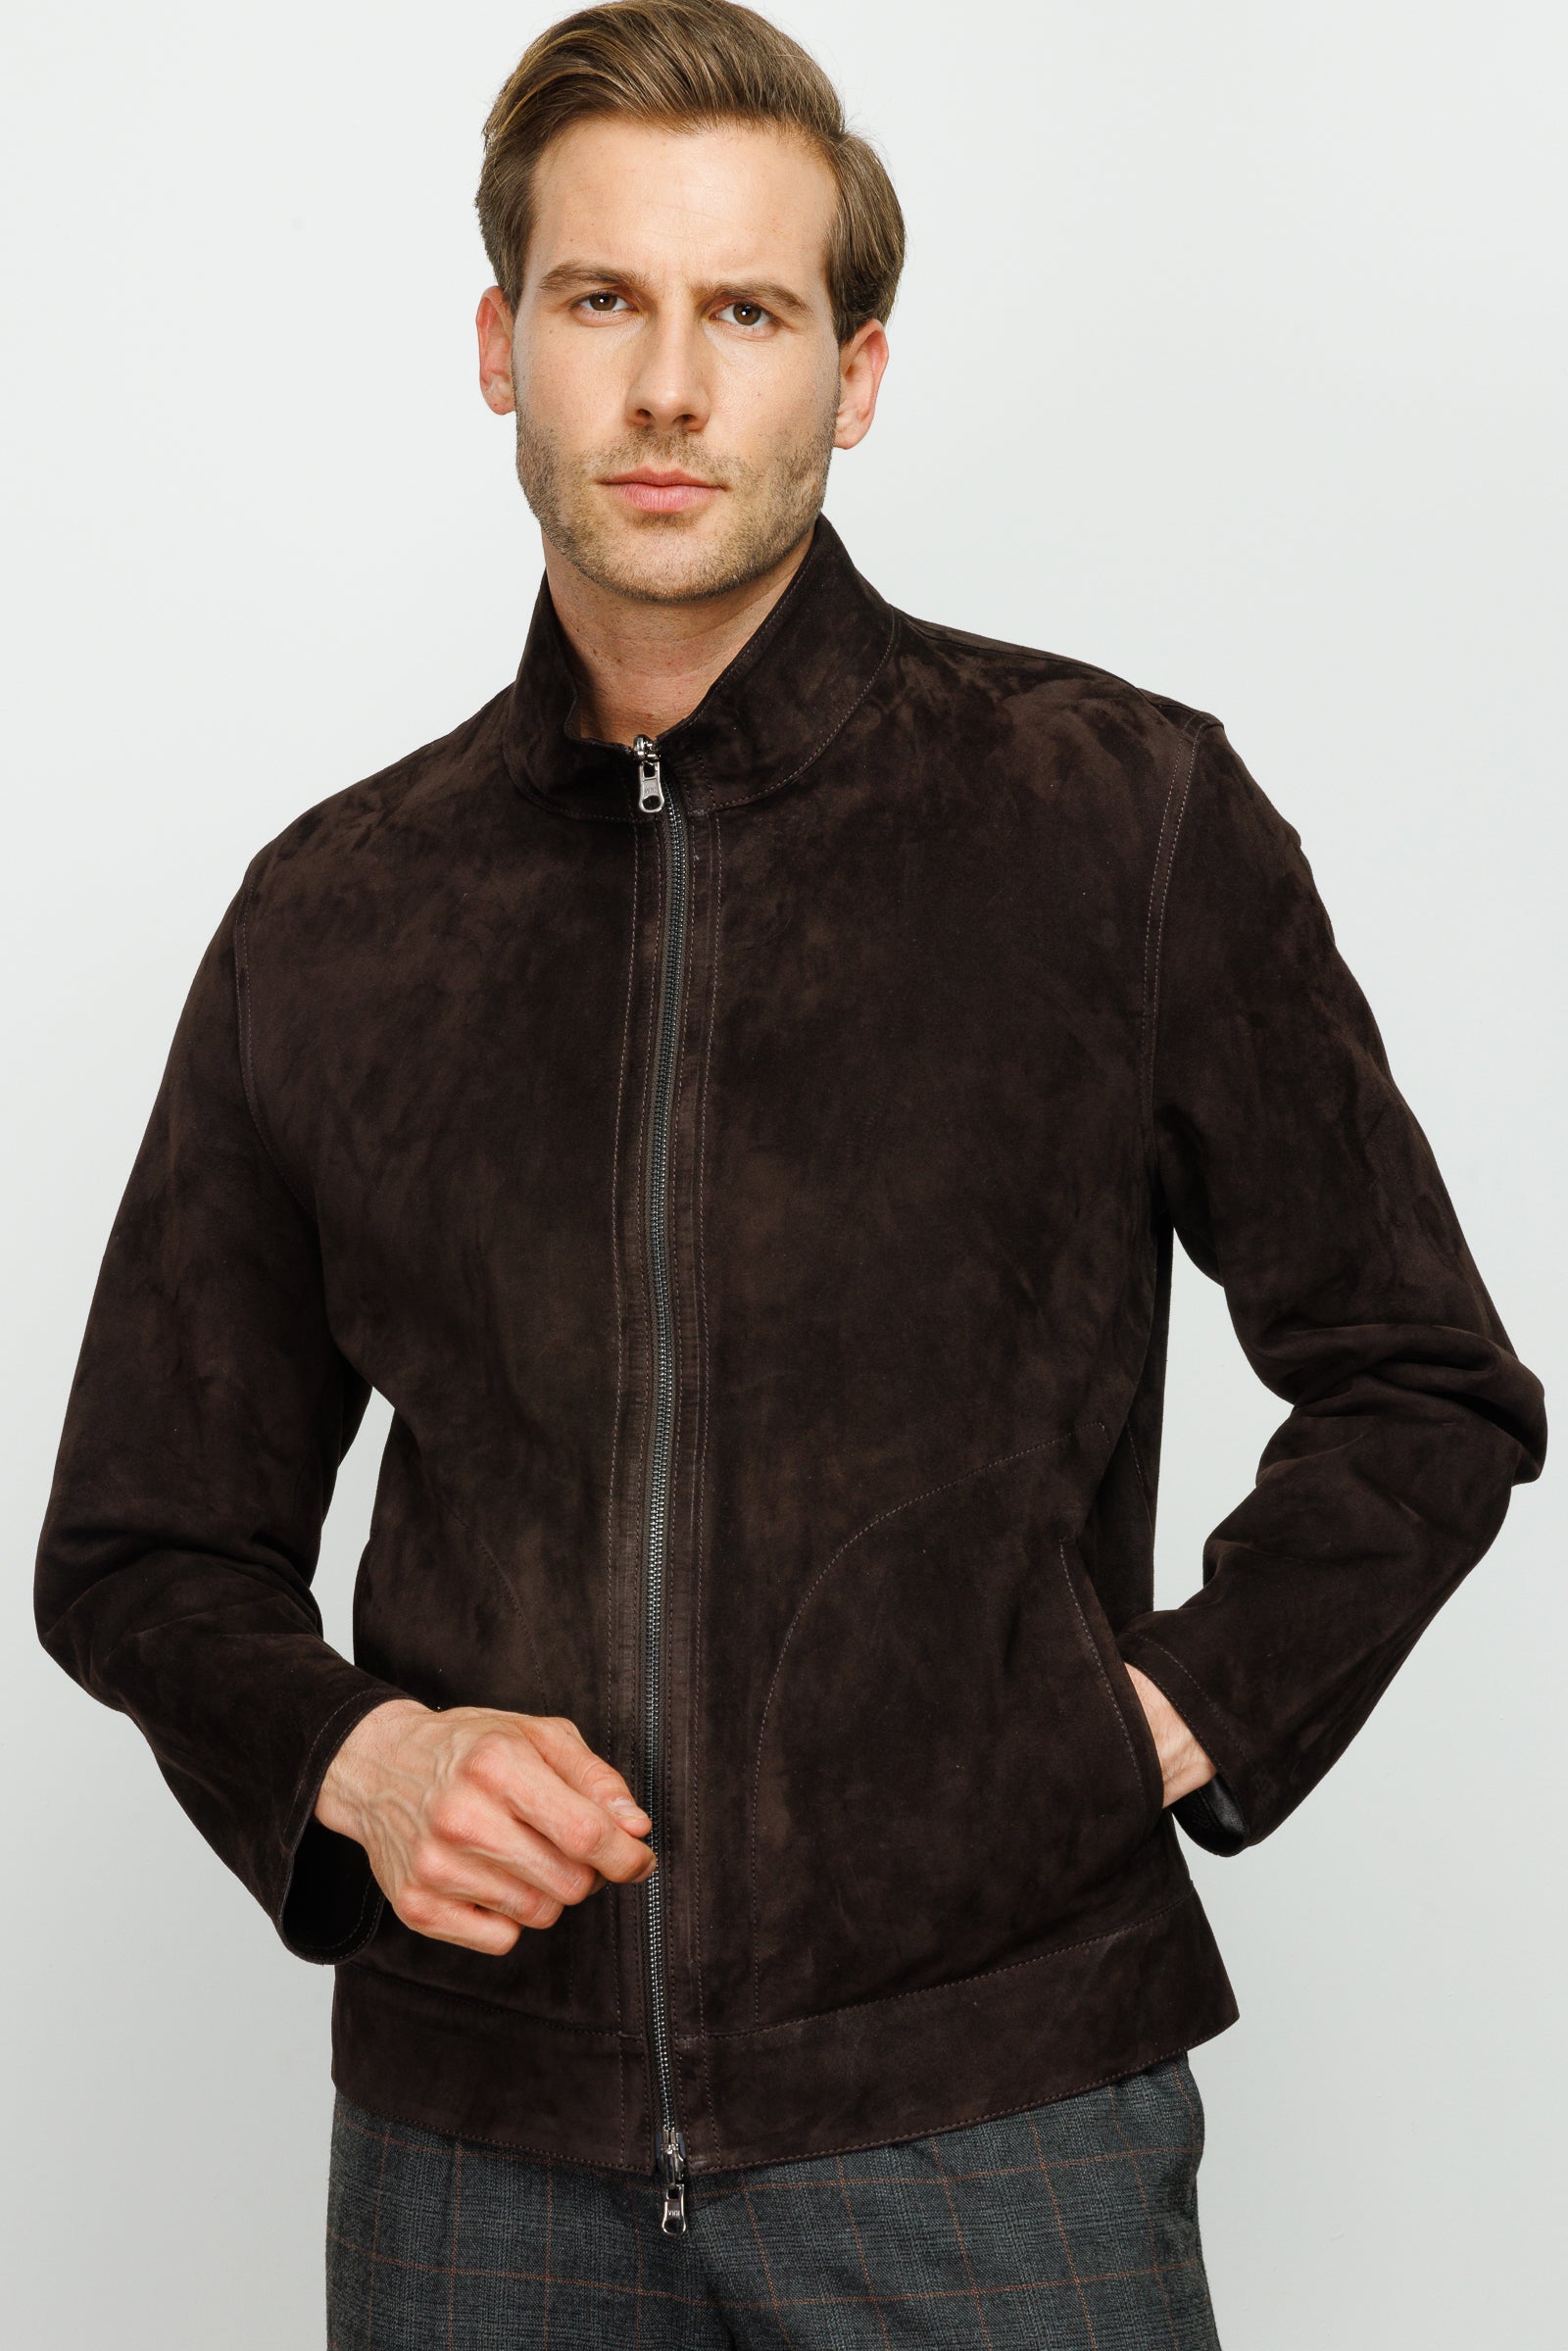 The Alba Black Leather Jacket